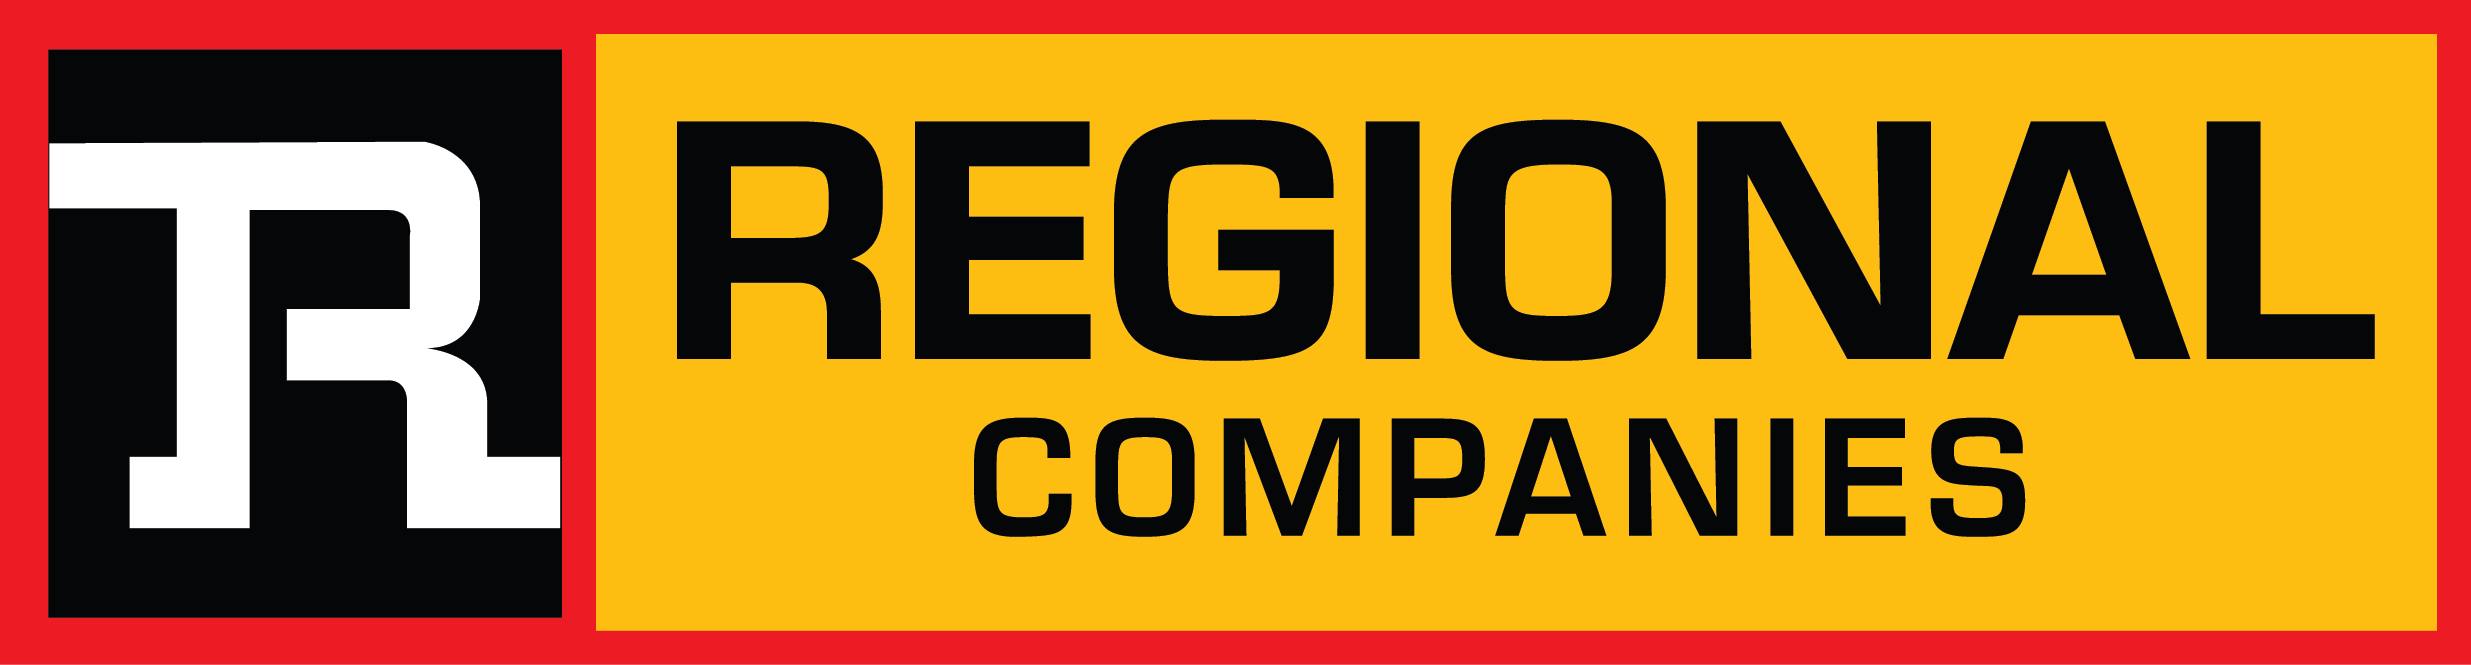 The Regional Companies